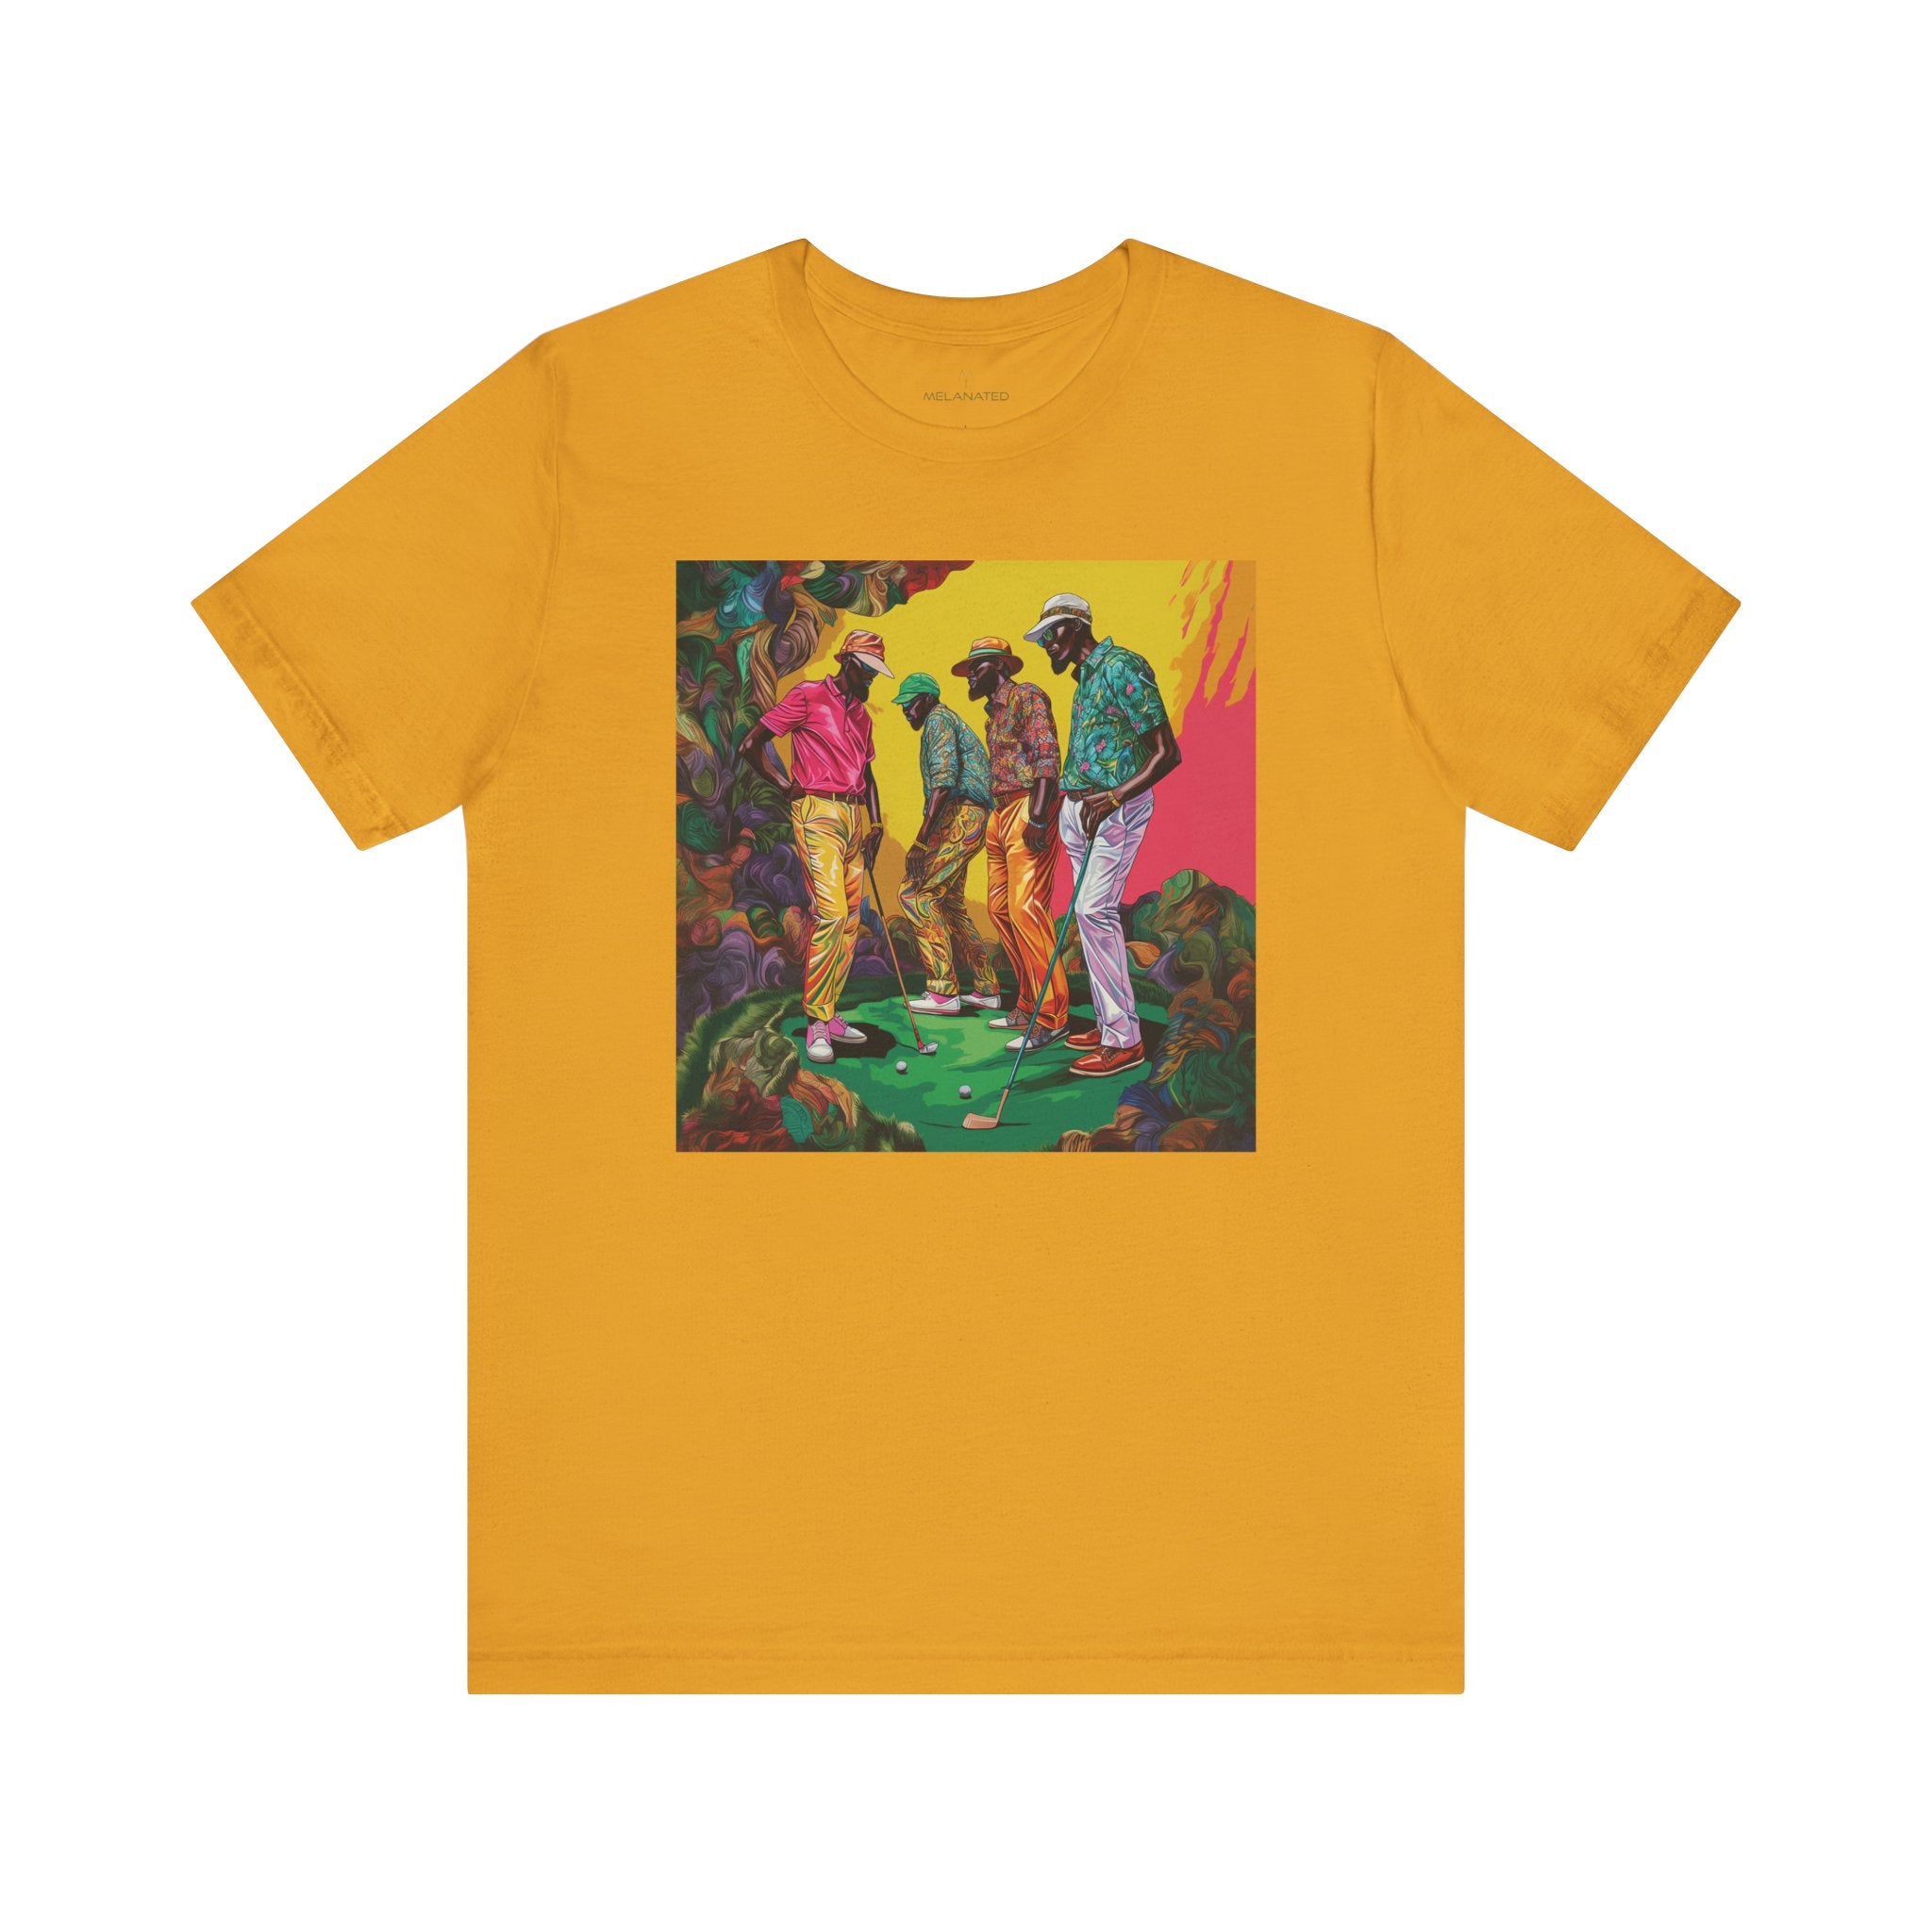 Black Men Golfers Tee Shirt in mustard.